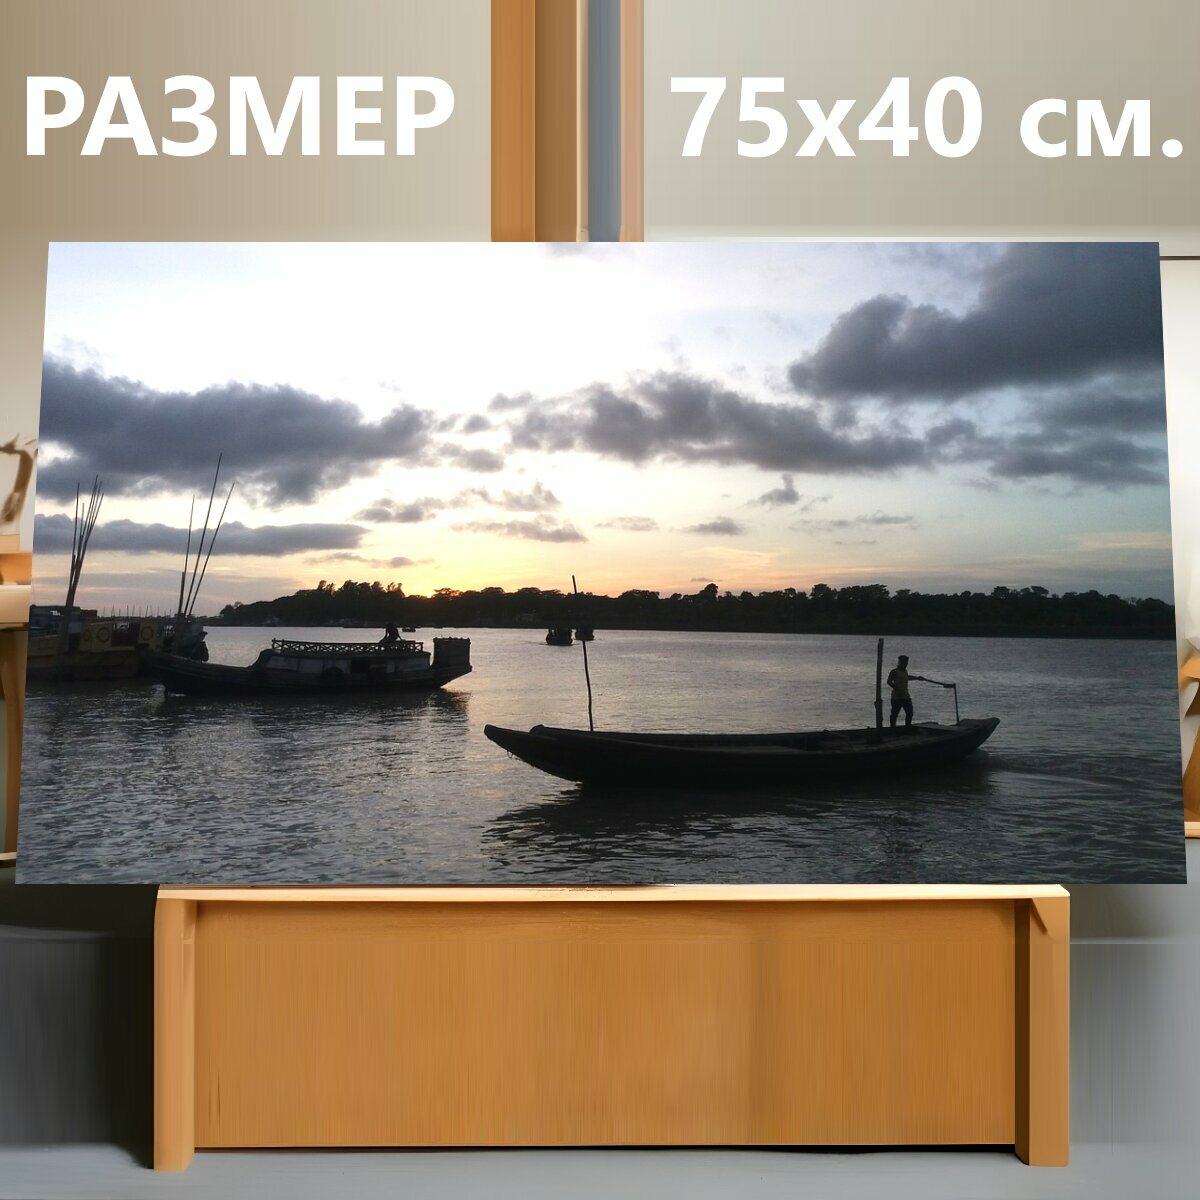 Картина на холсте "Бангладеш, река, лодка" на подрамнике 75х40 см. для интерьера